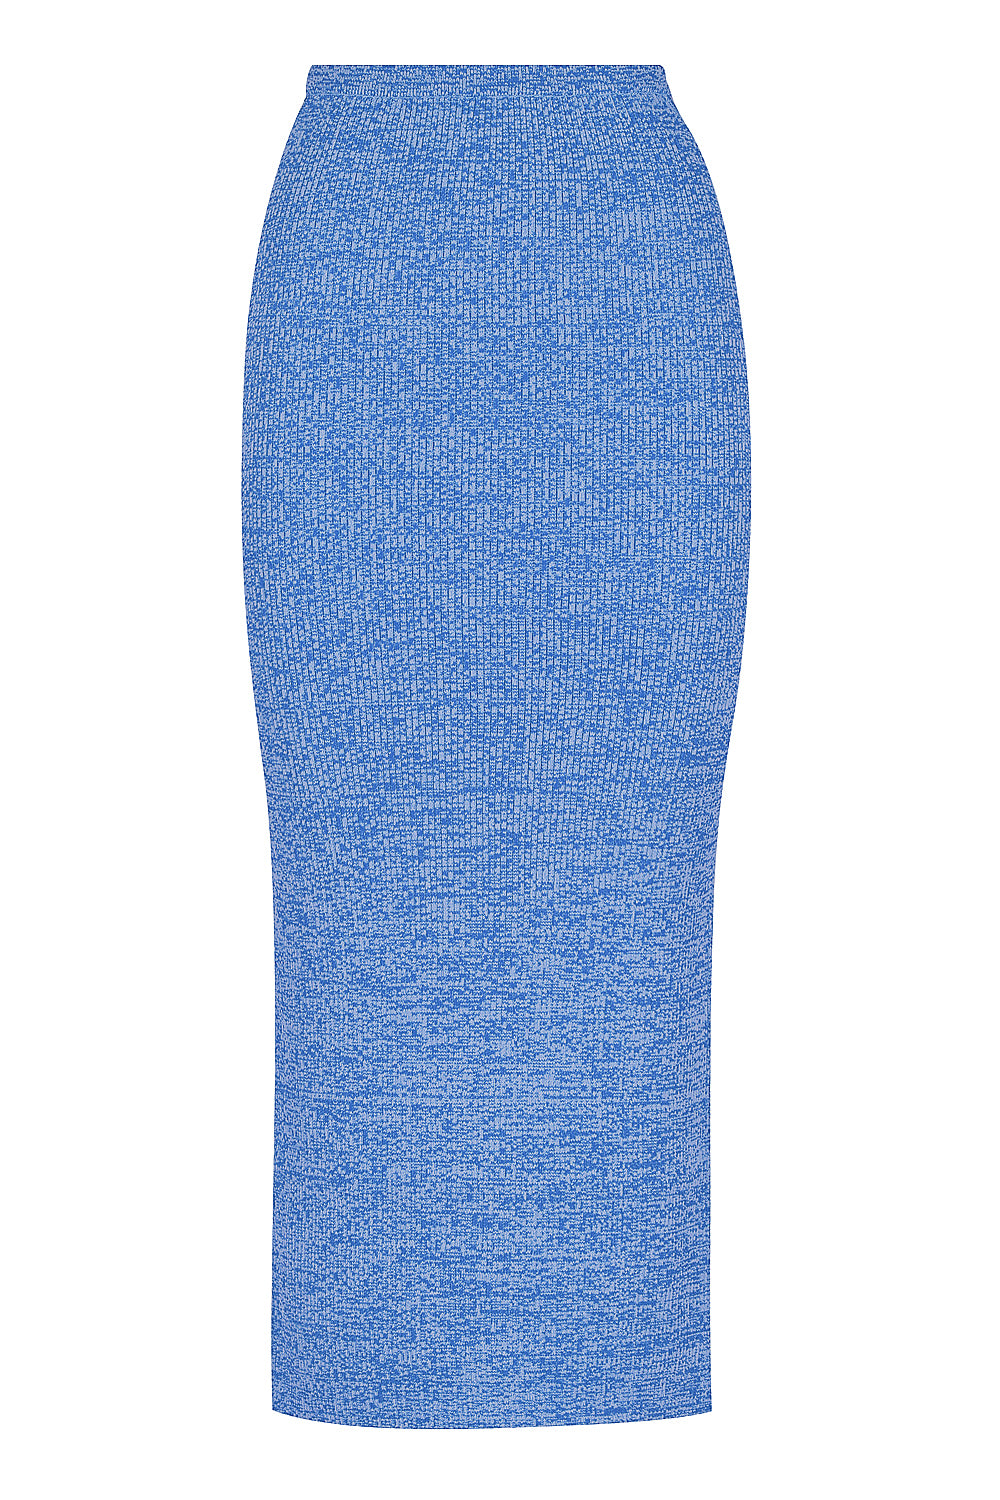 The Cut it Out Knit Skirt - Navy / Ocean Blue